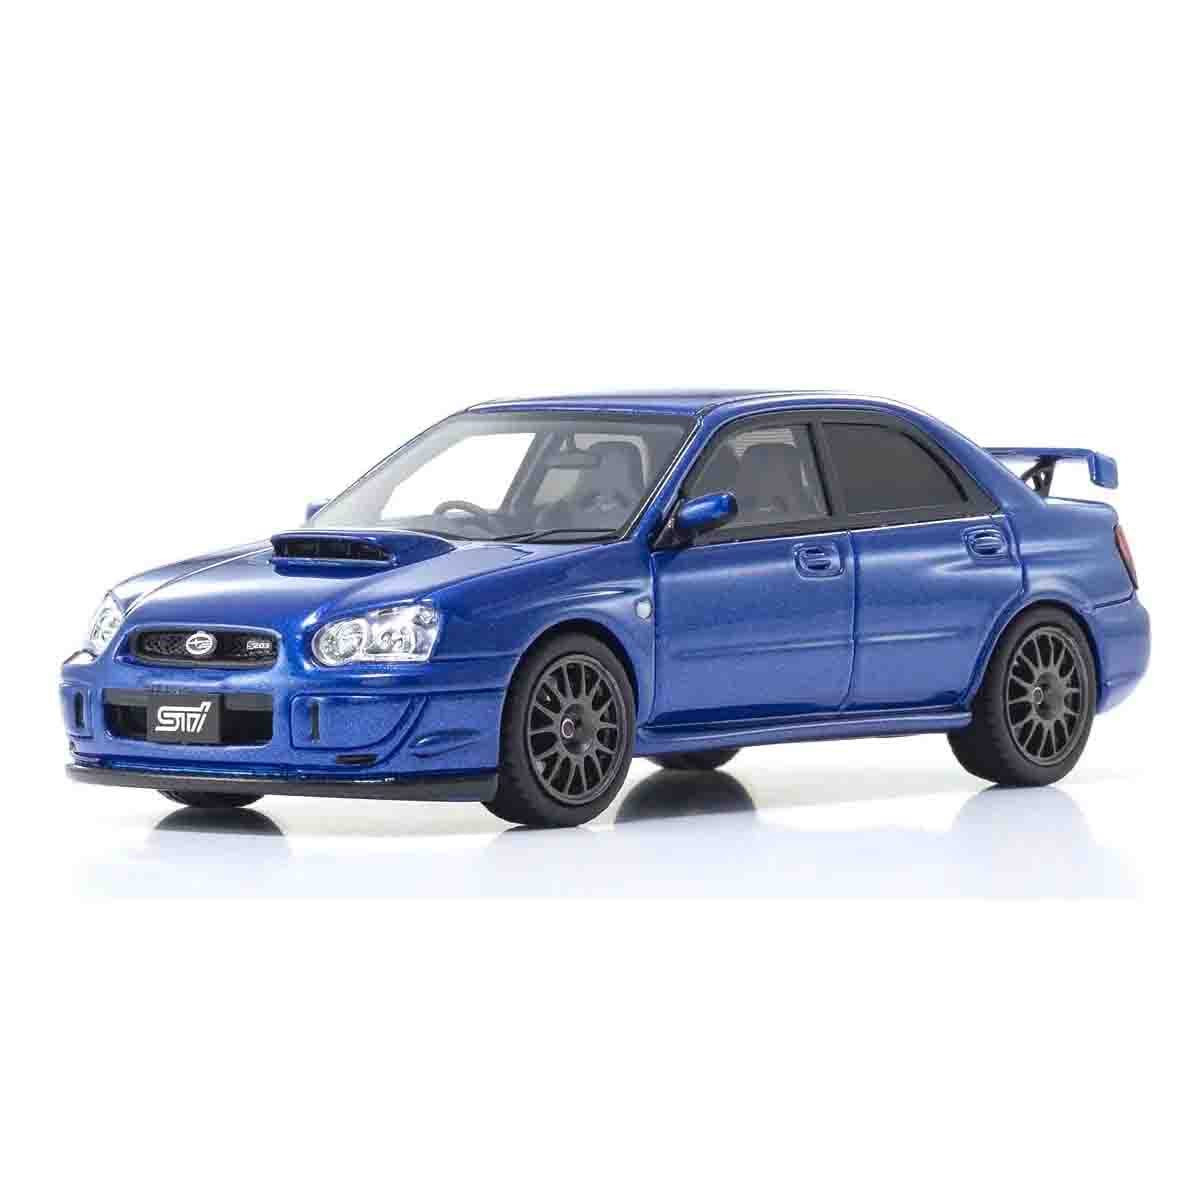 Subaru Impreza S203 Blue metallic - 1:43 Scale Resin Model Car